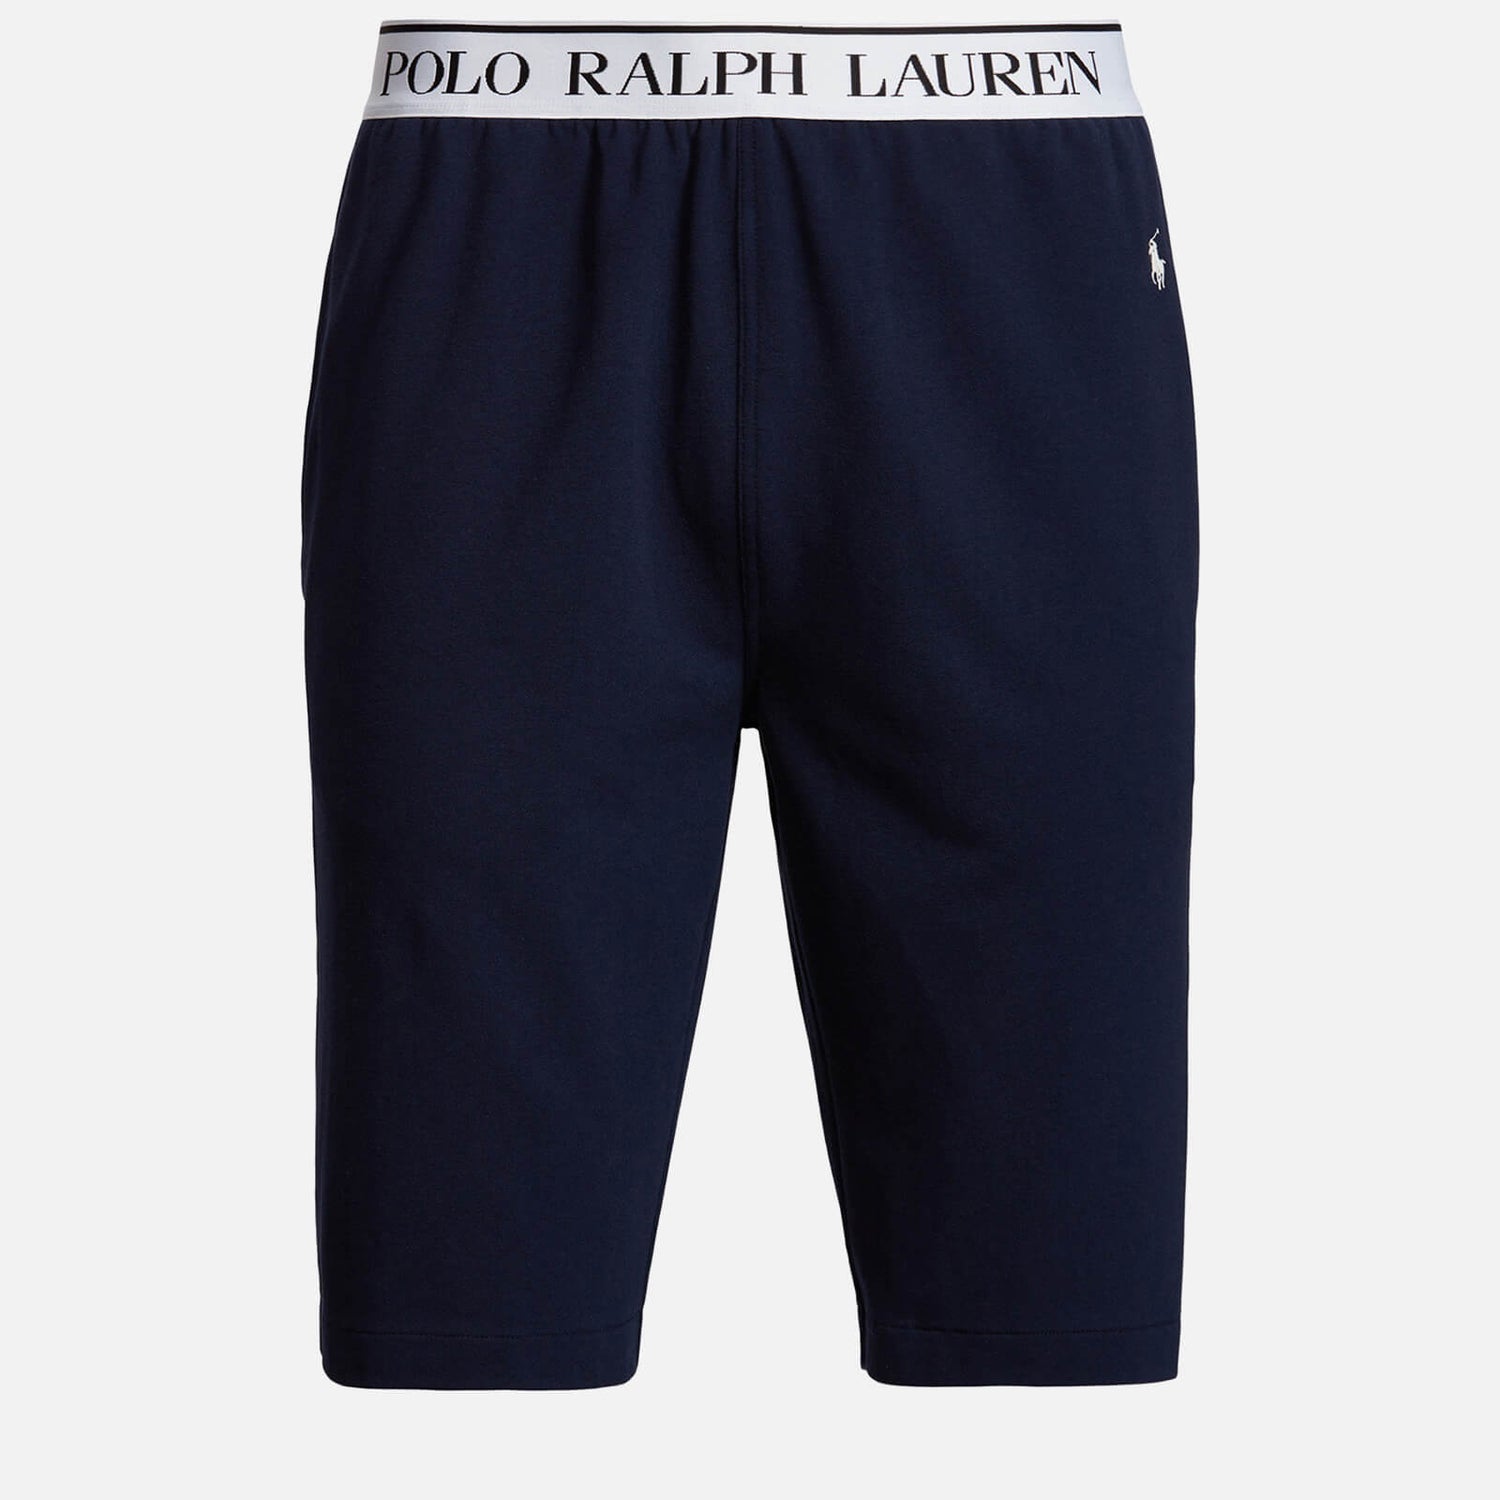 Polo Ralph Lauren Men's Lightweight Fleece Sleep Shorts - Polo Black - S